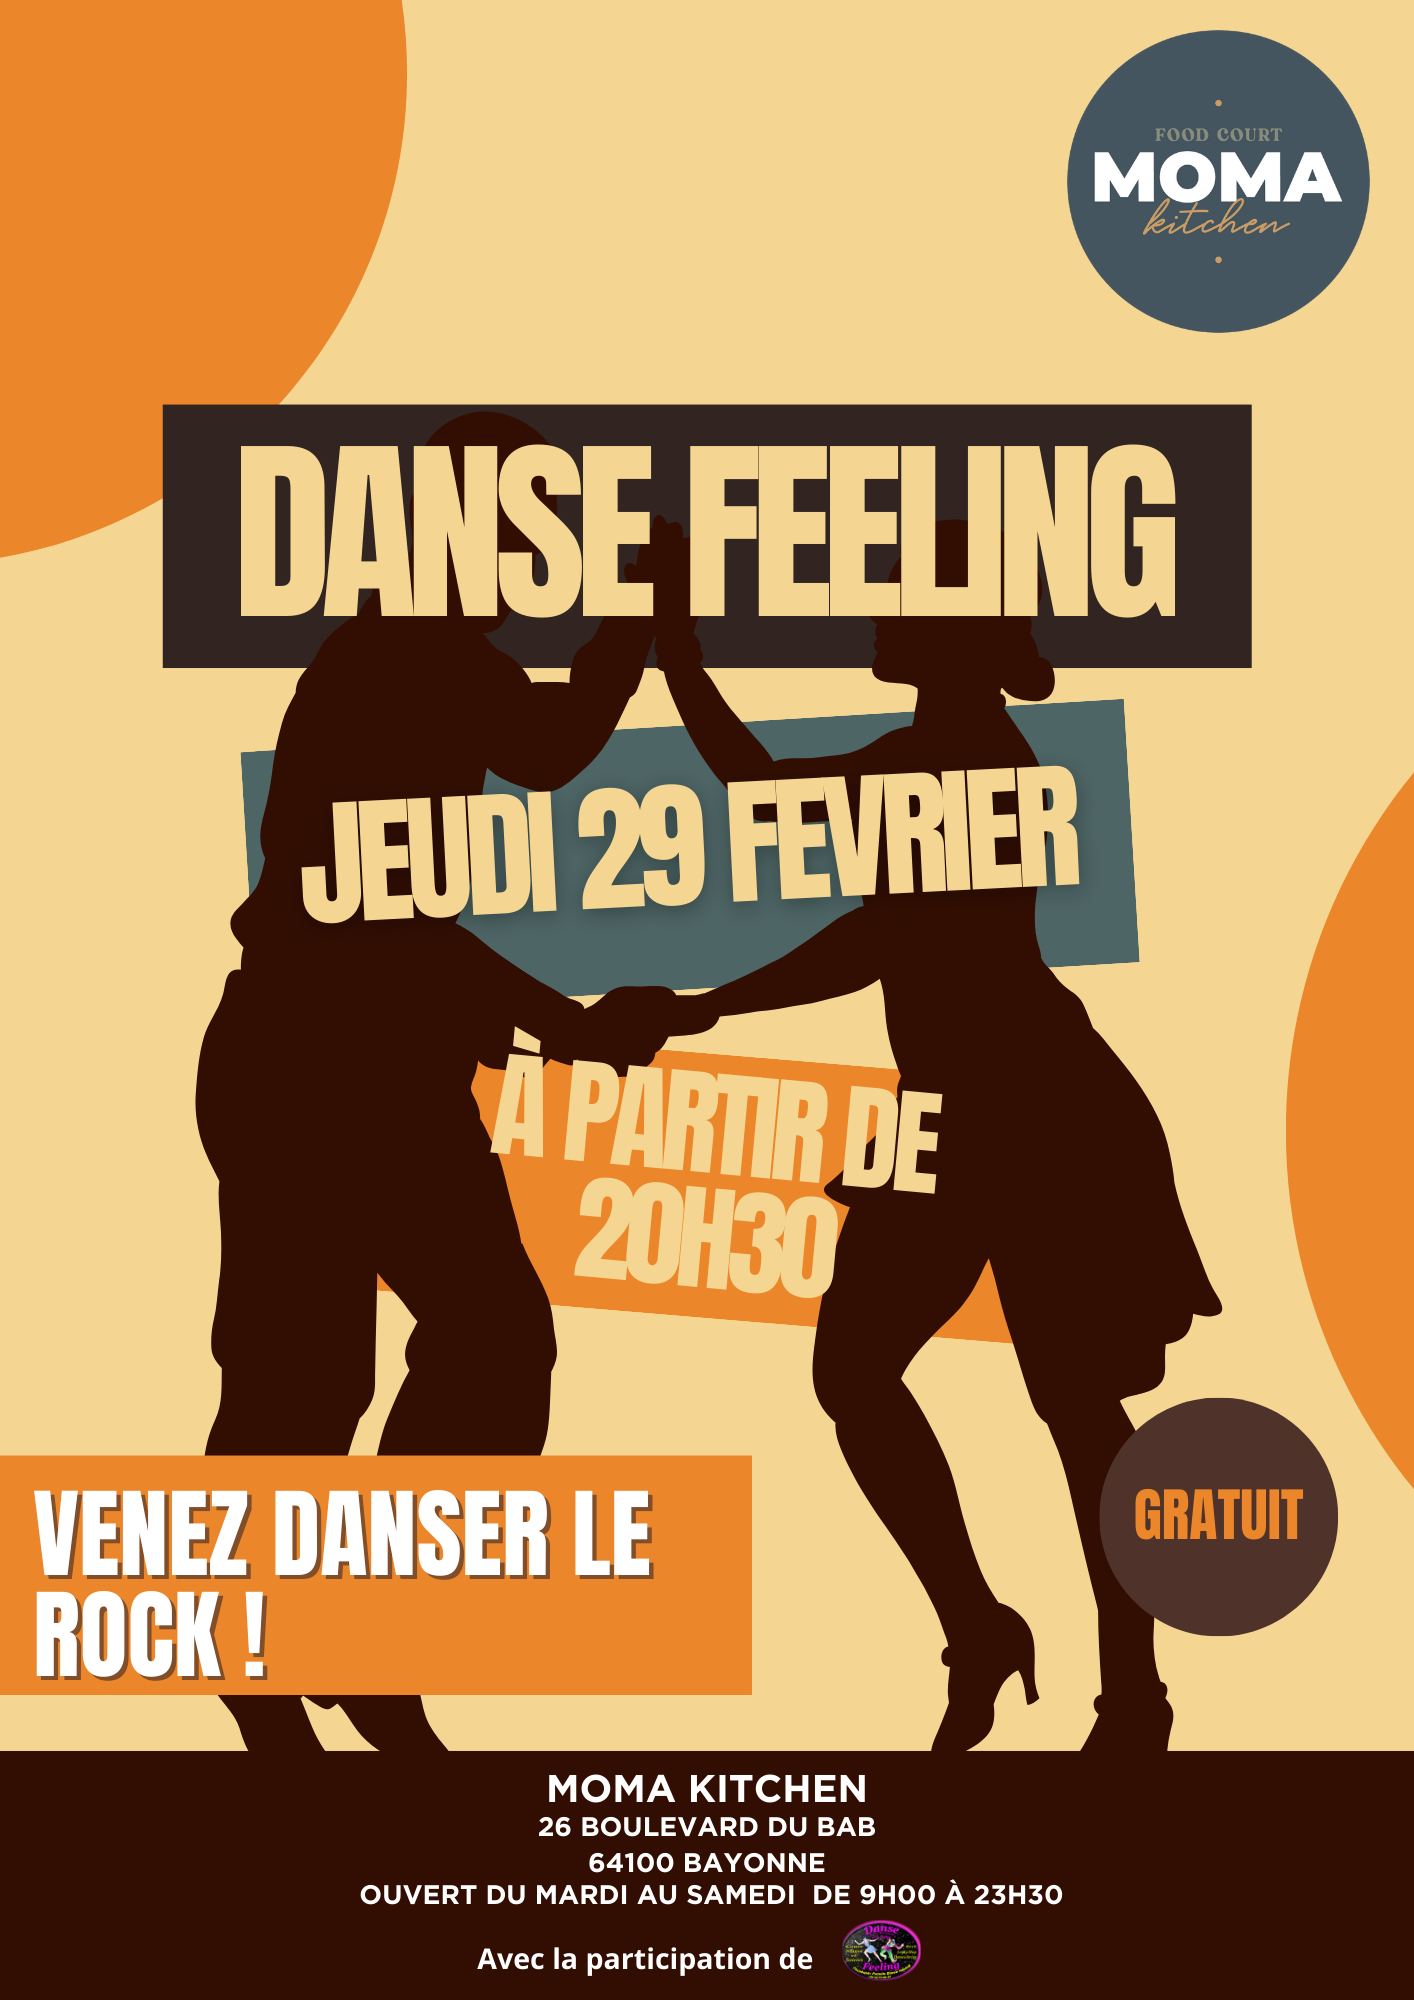 Venez danser le rock avec  » Danse Feeling » au MOMA Kitchen !